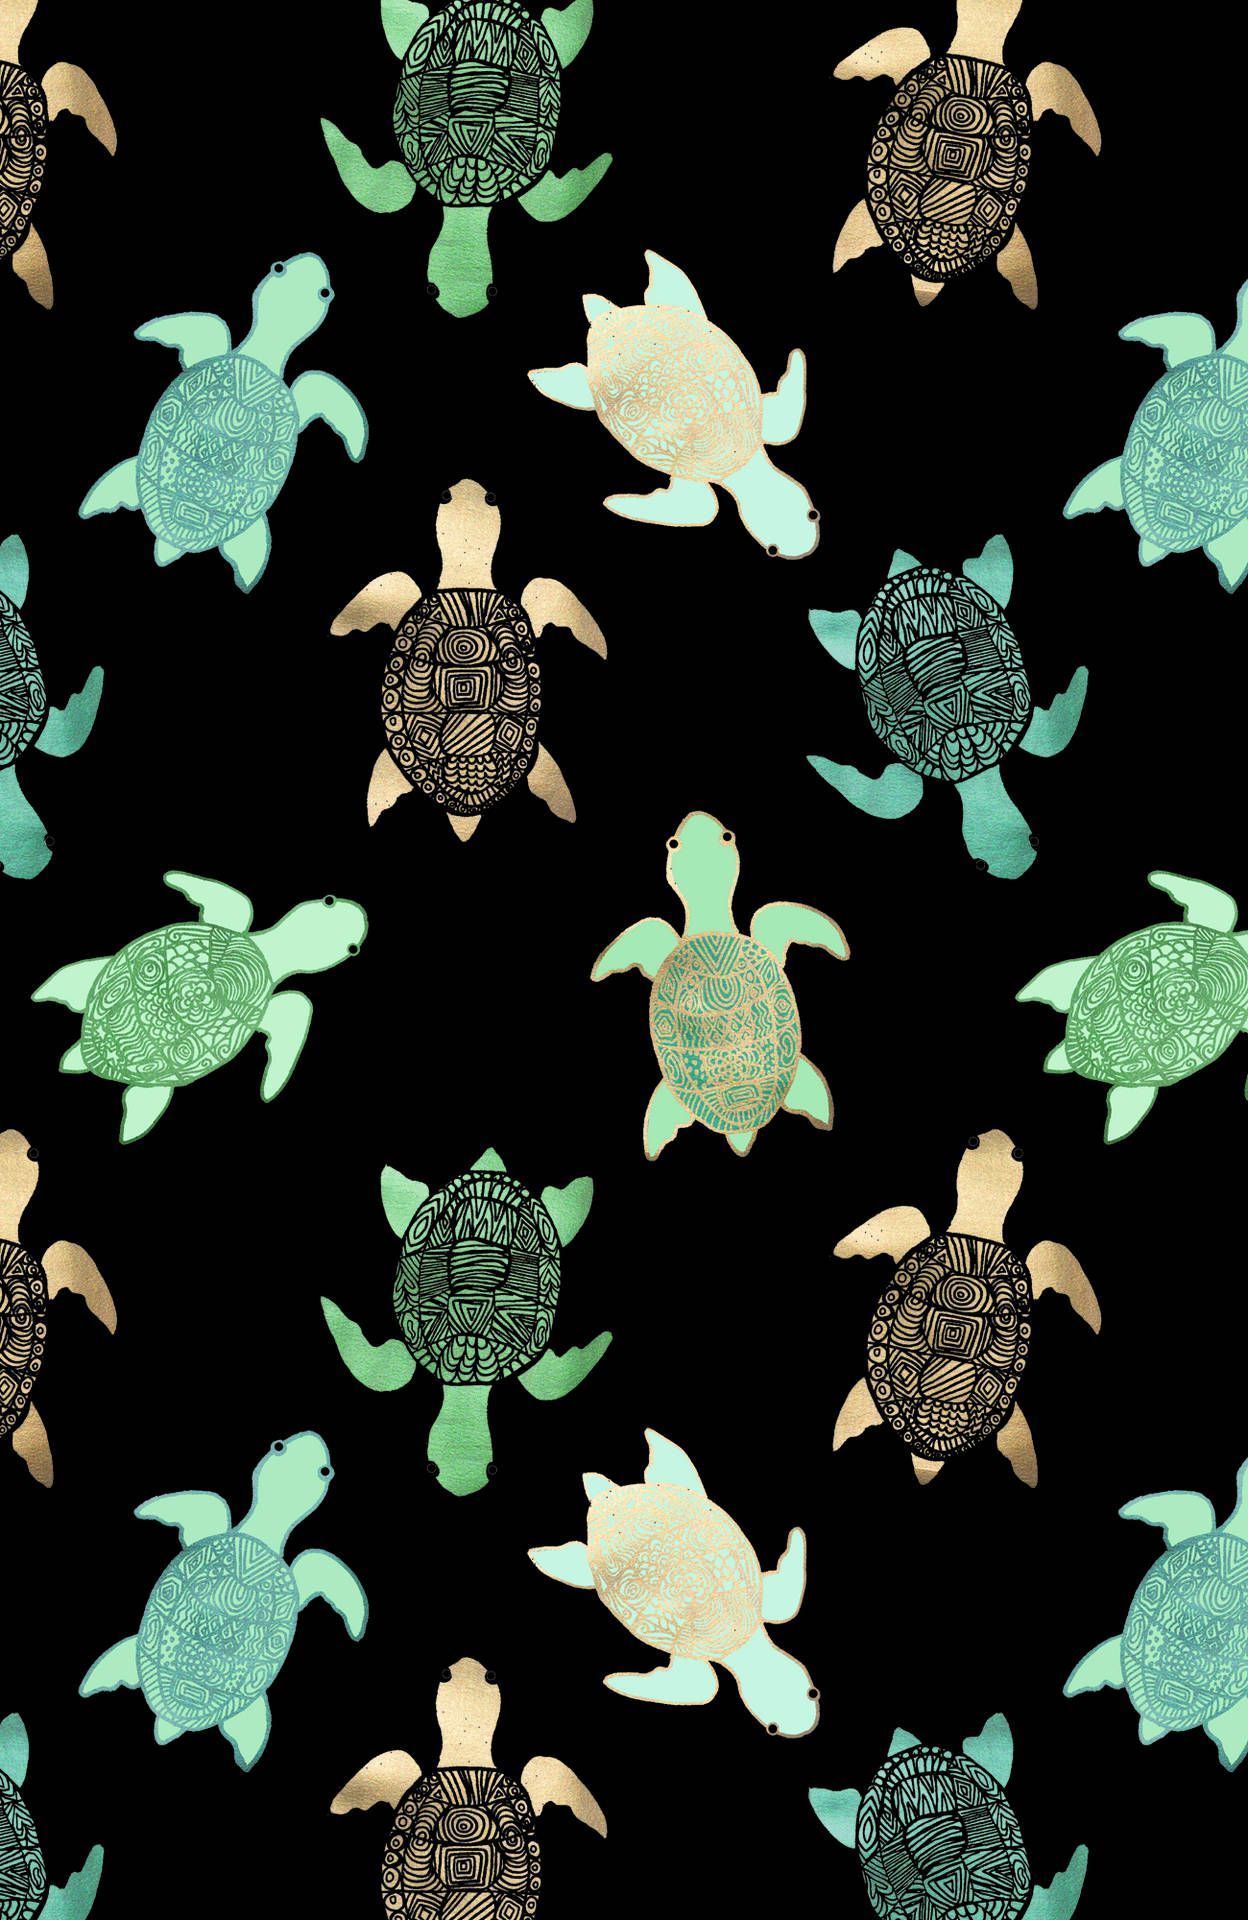 Free Cute Turtle Wallpaper Downloads, Cute Turtle Wallpaper for FREE